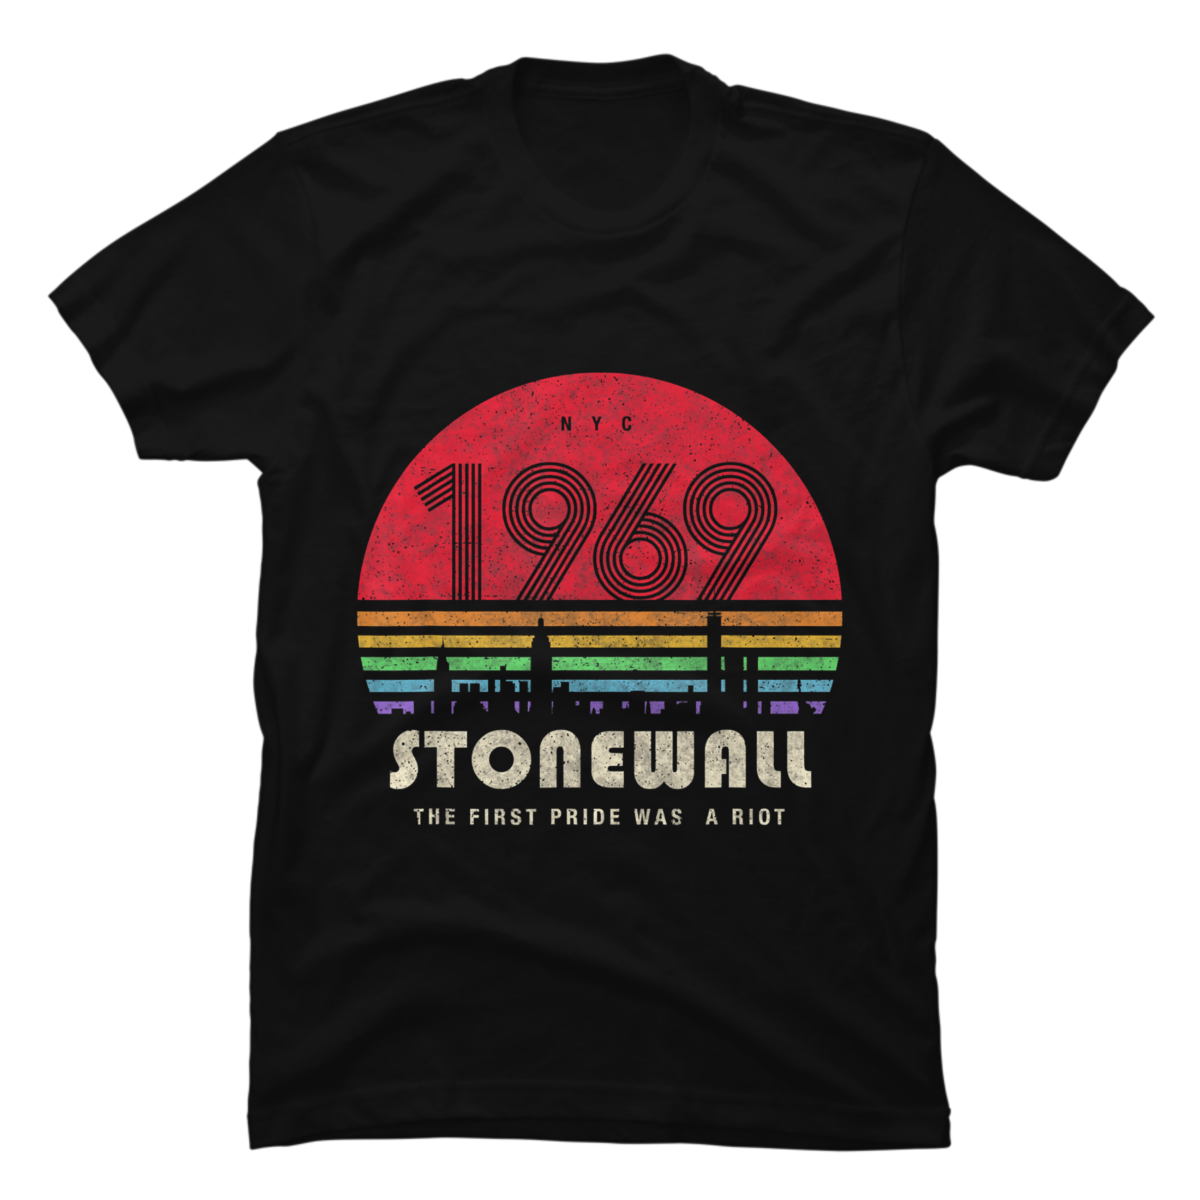 stonewall was a riot shirt